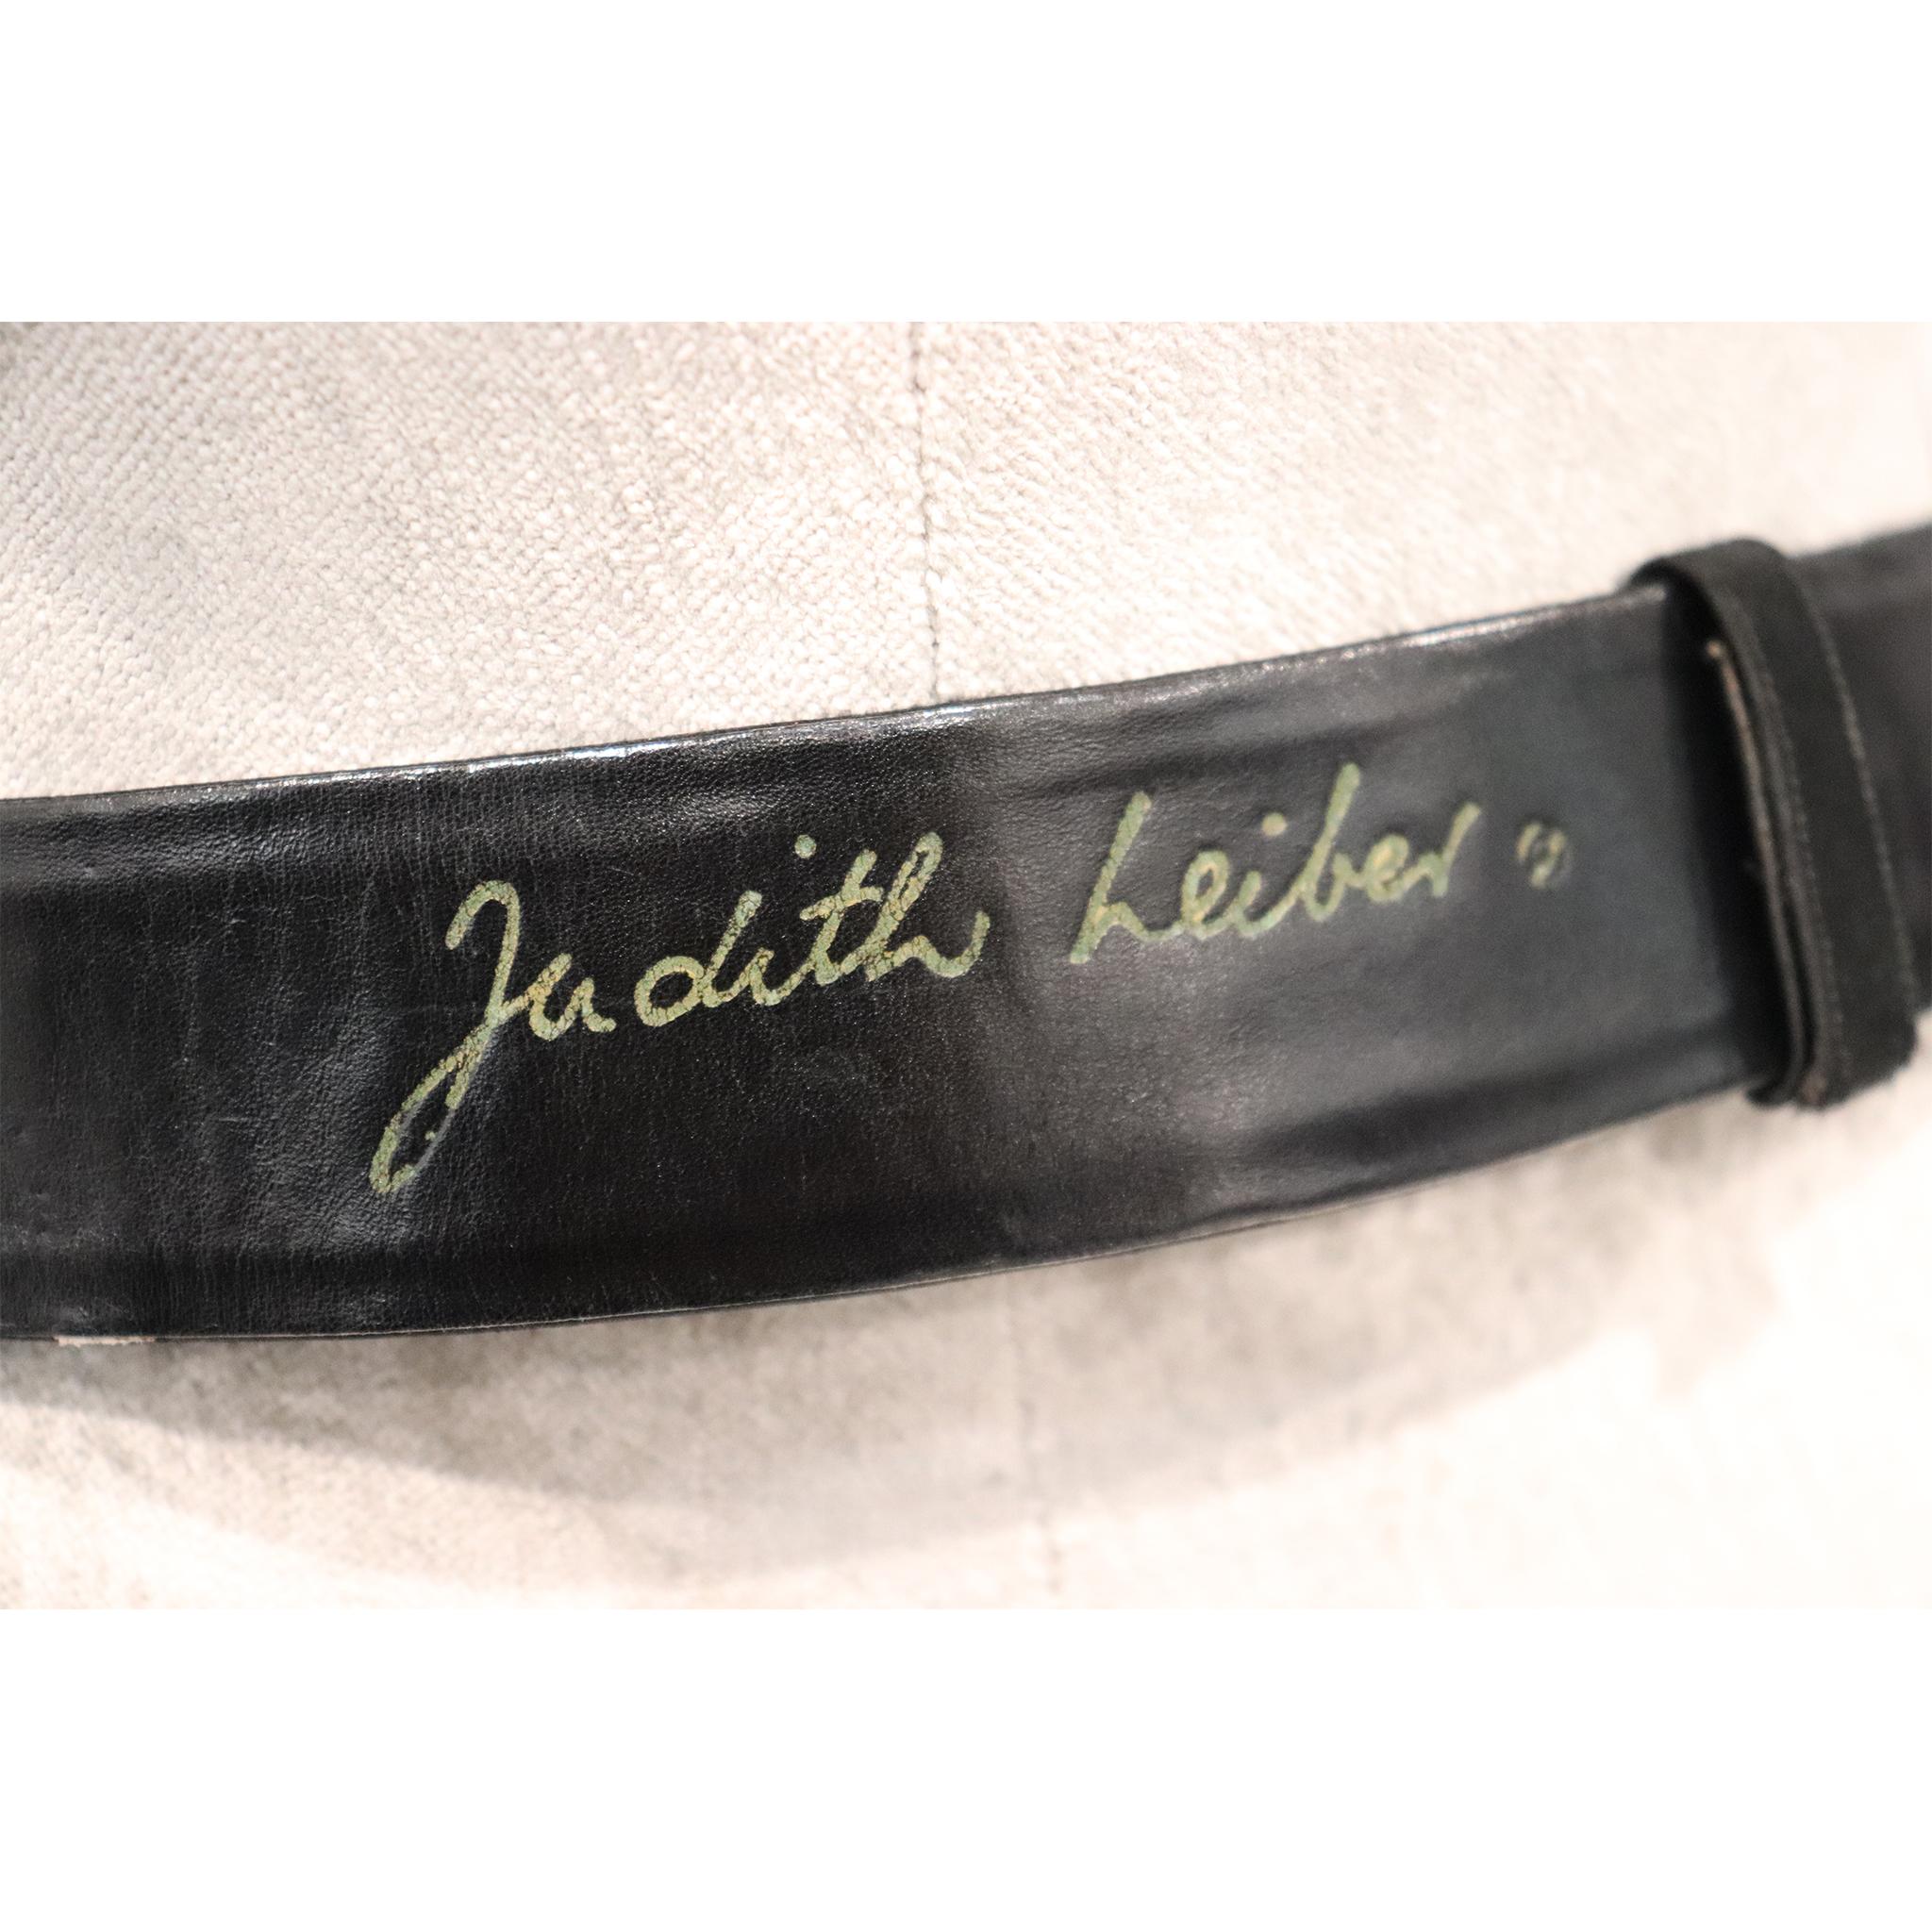 black satin belt with buckle